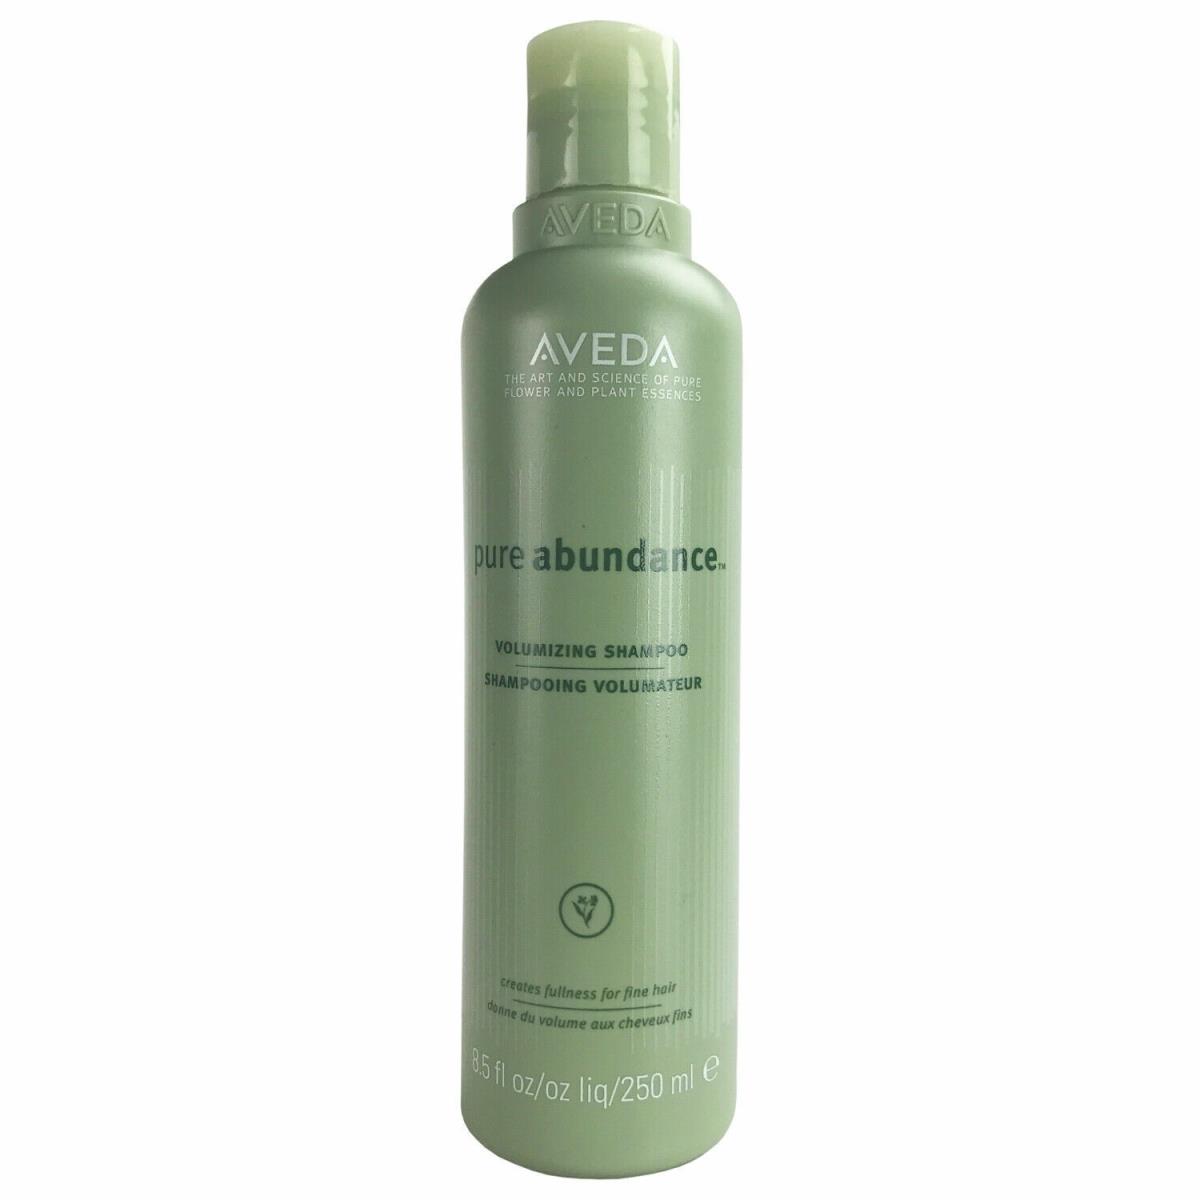 Aveda Pure Abundance Volumizing Shampoo 8.5 oz